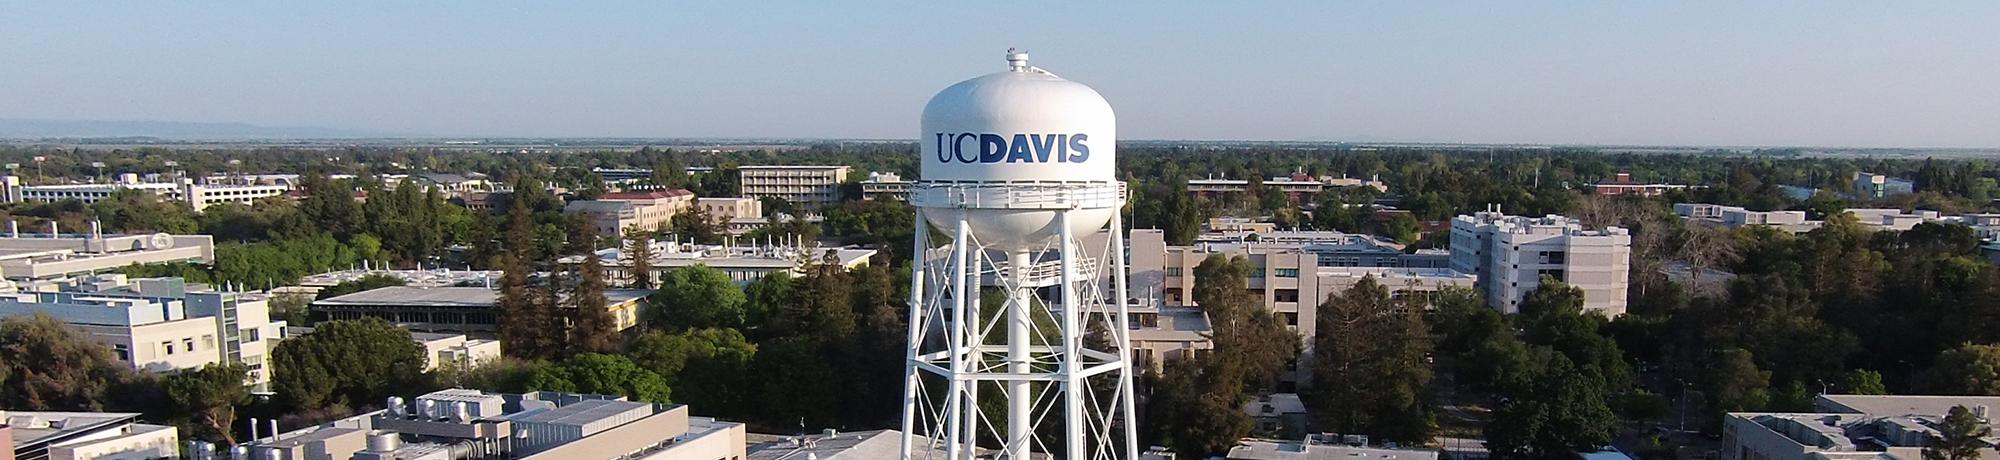 The UC Davis water tower